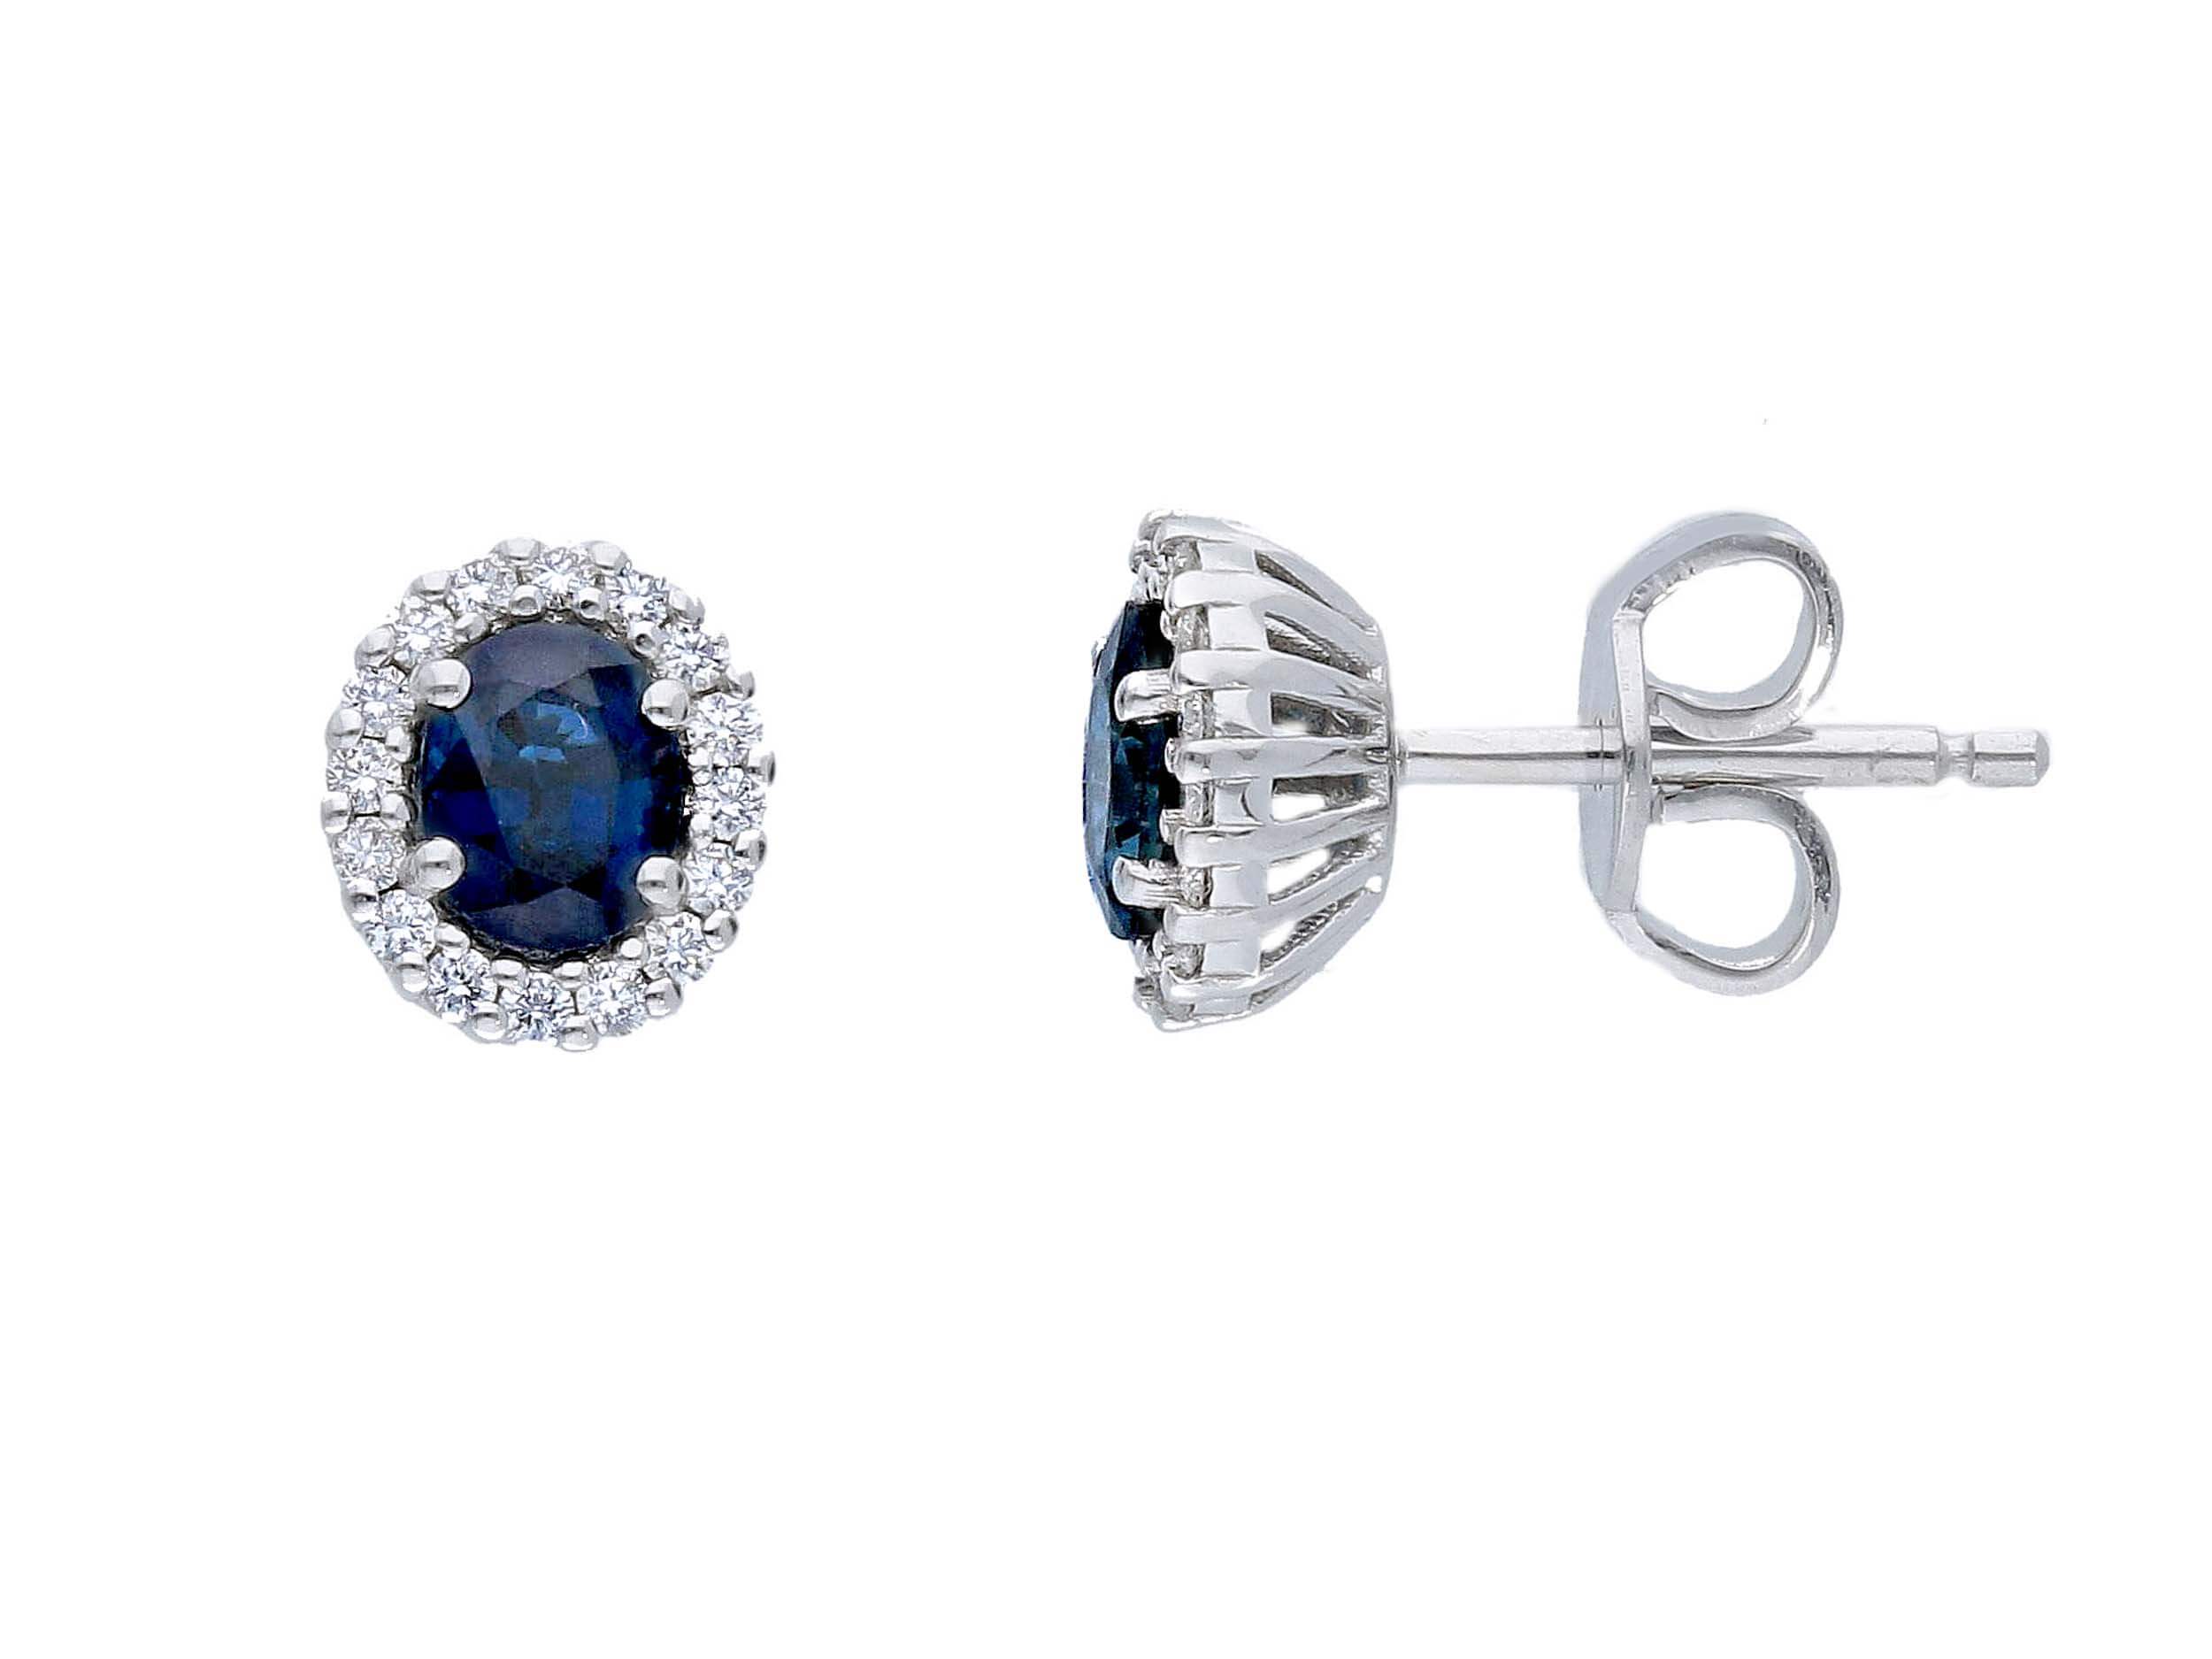 Blue Sapphire Earrings White Gold 750% Diamonds Art. 211580